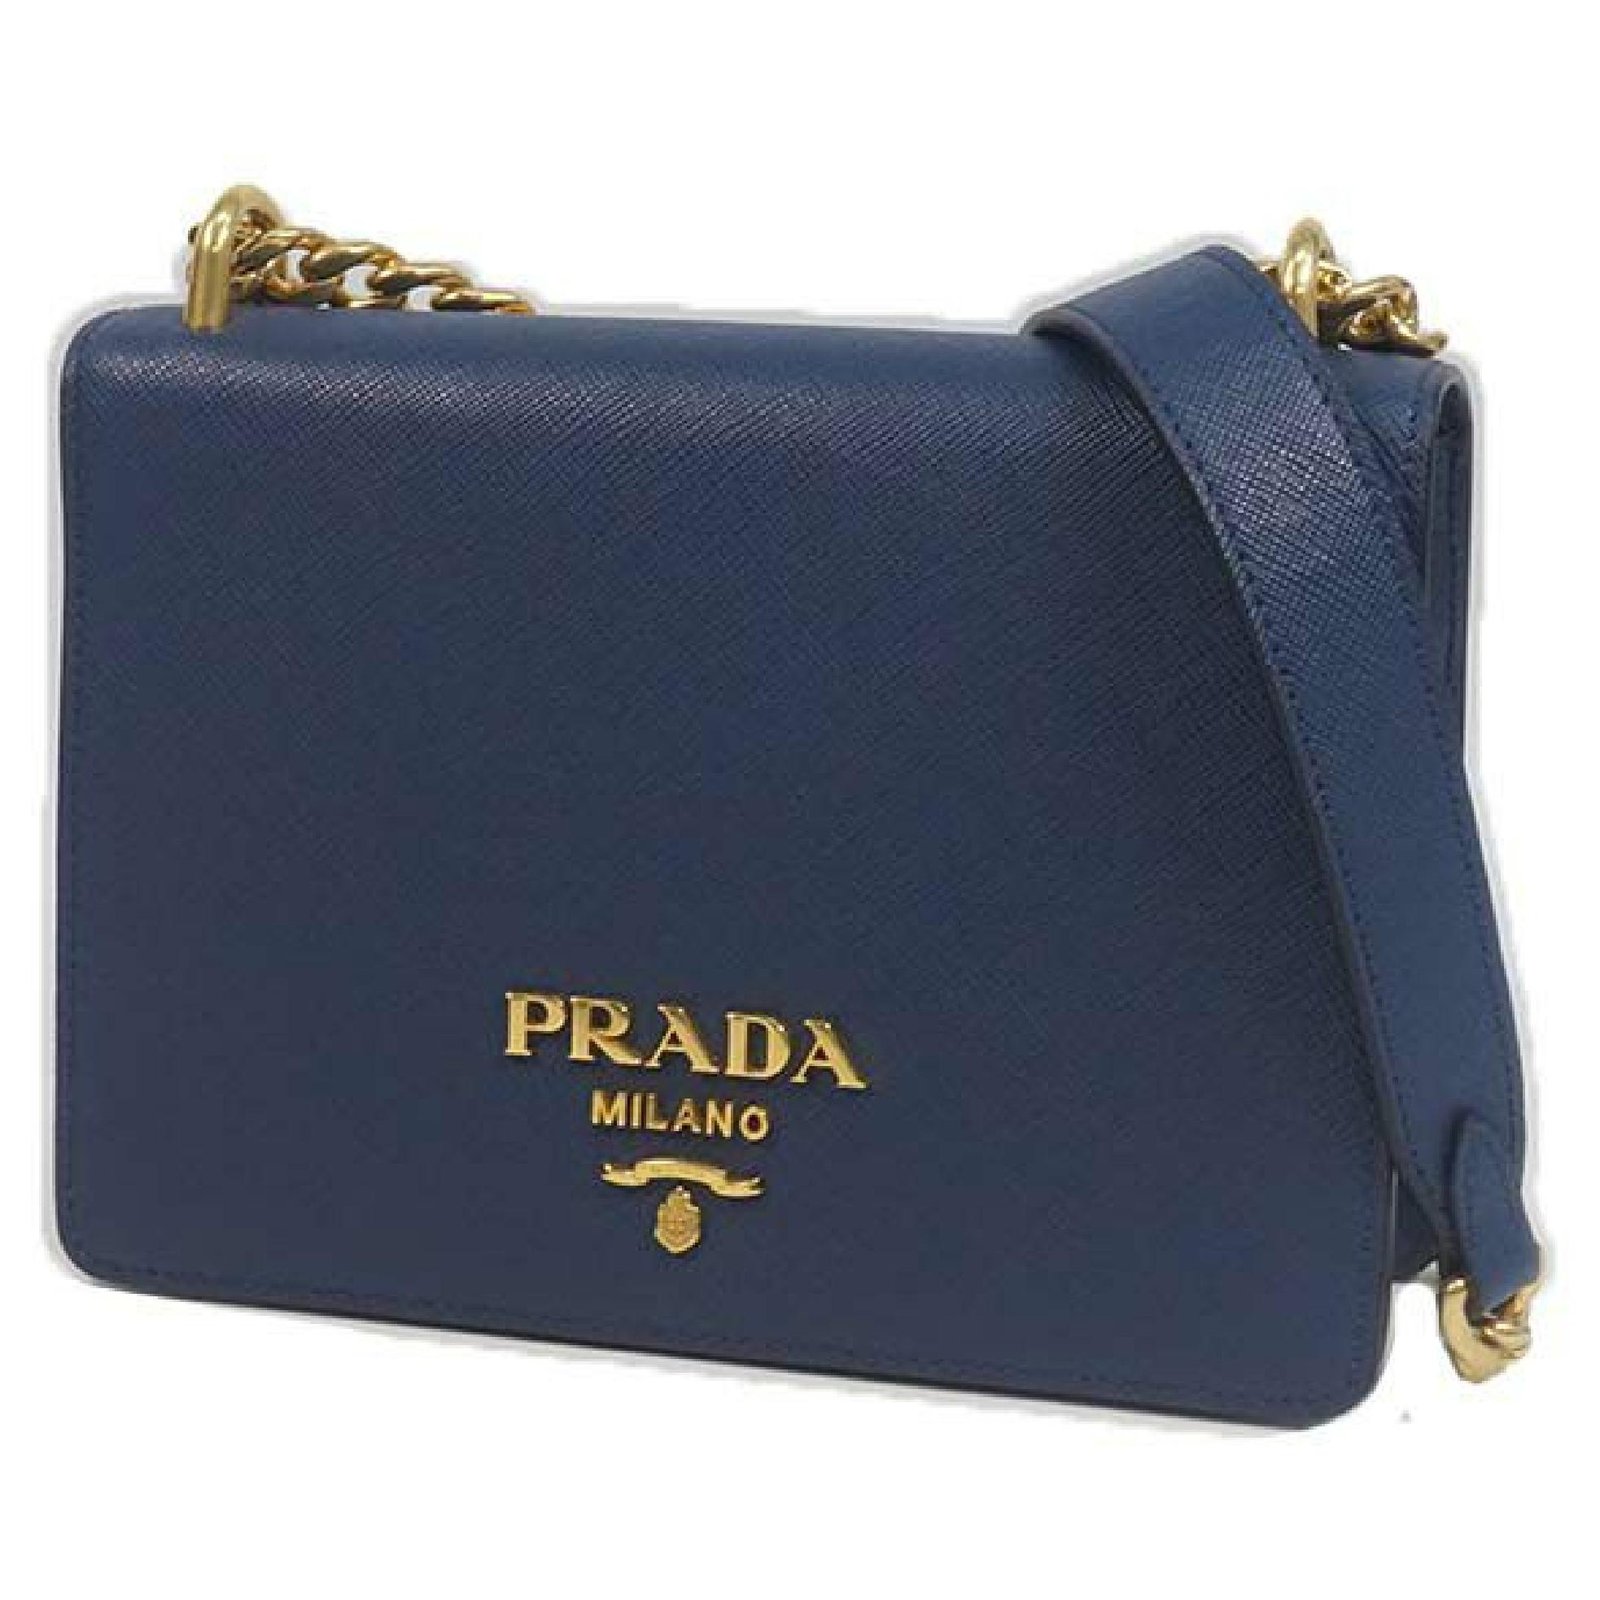 prada womens handbags